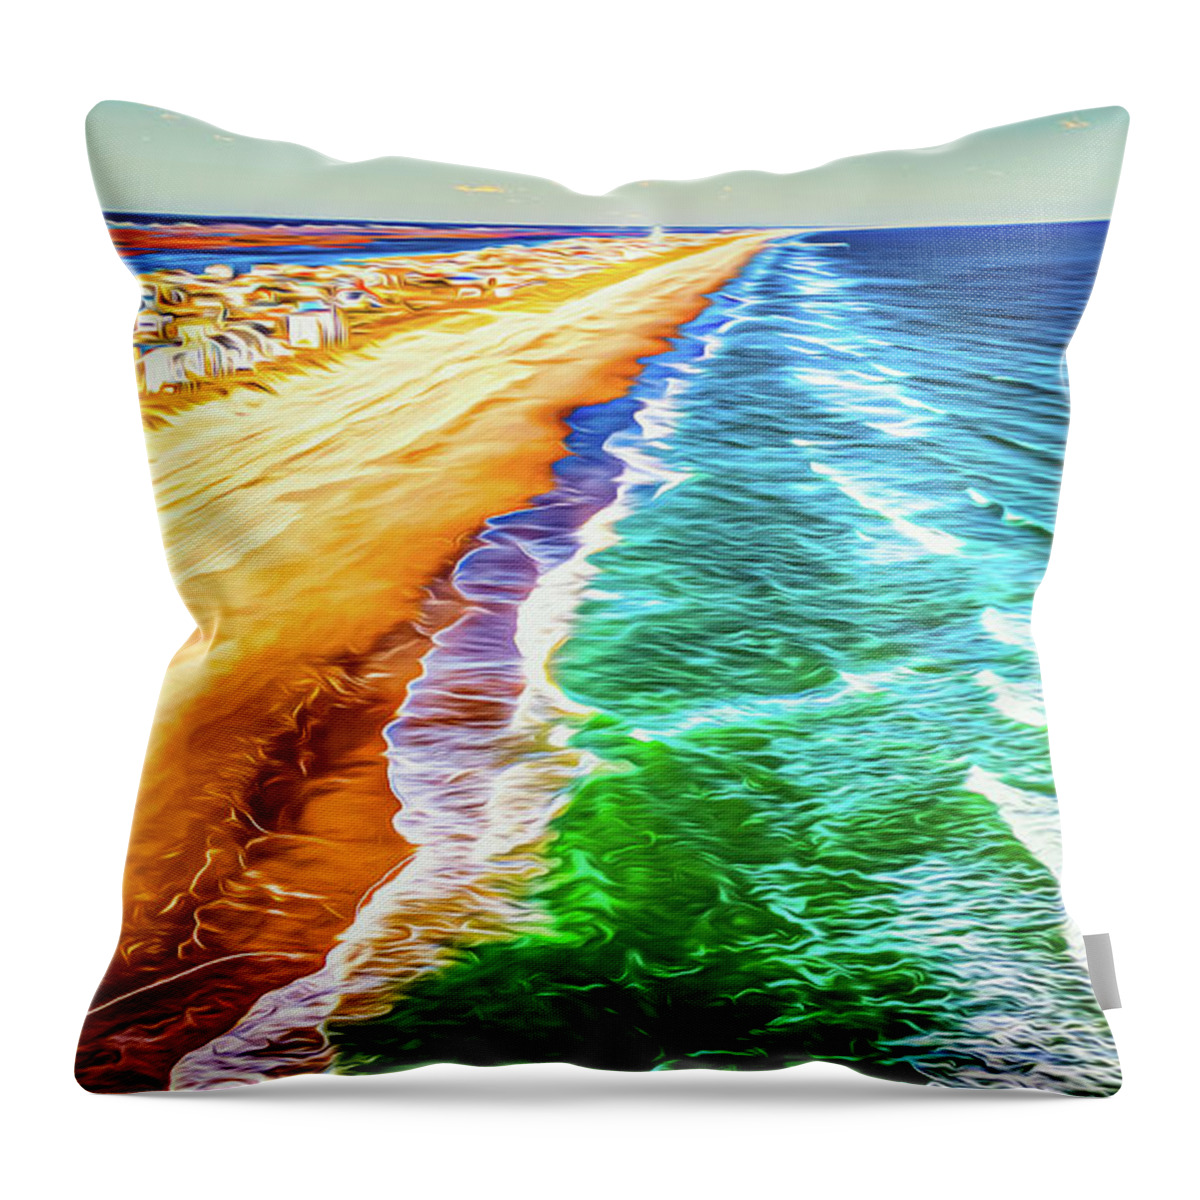 Topsail Beach Throw Pillow featuring the digital art Painted Beach by Sand Catcher